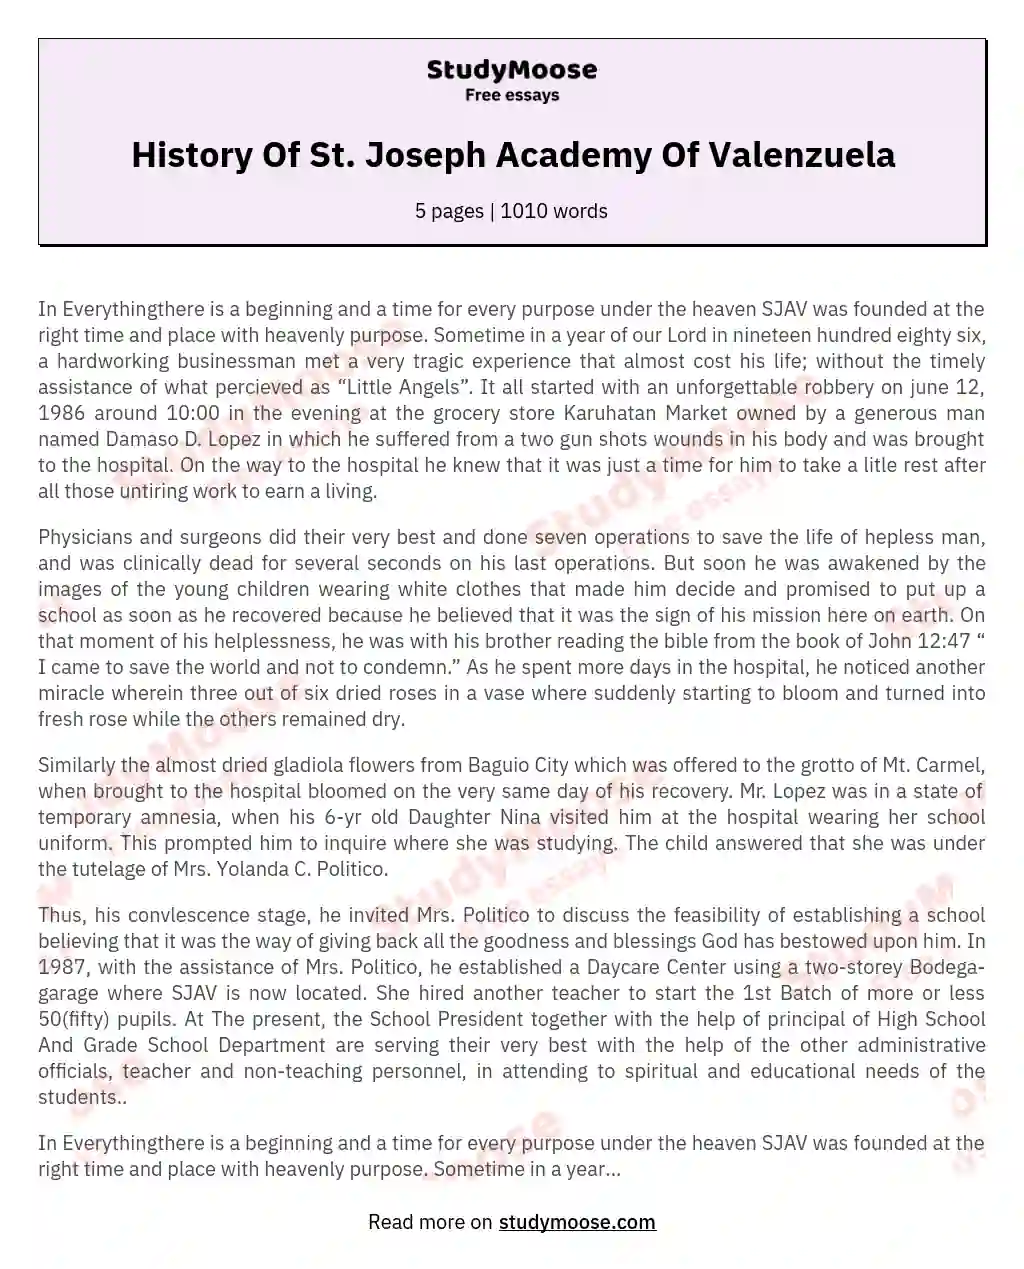 History Of St. Joseph Academy Of Valenzuela essay